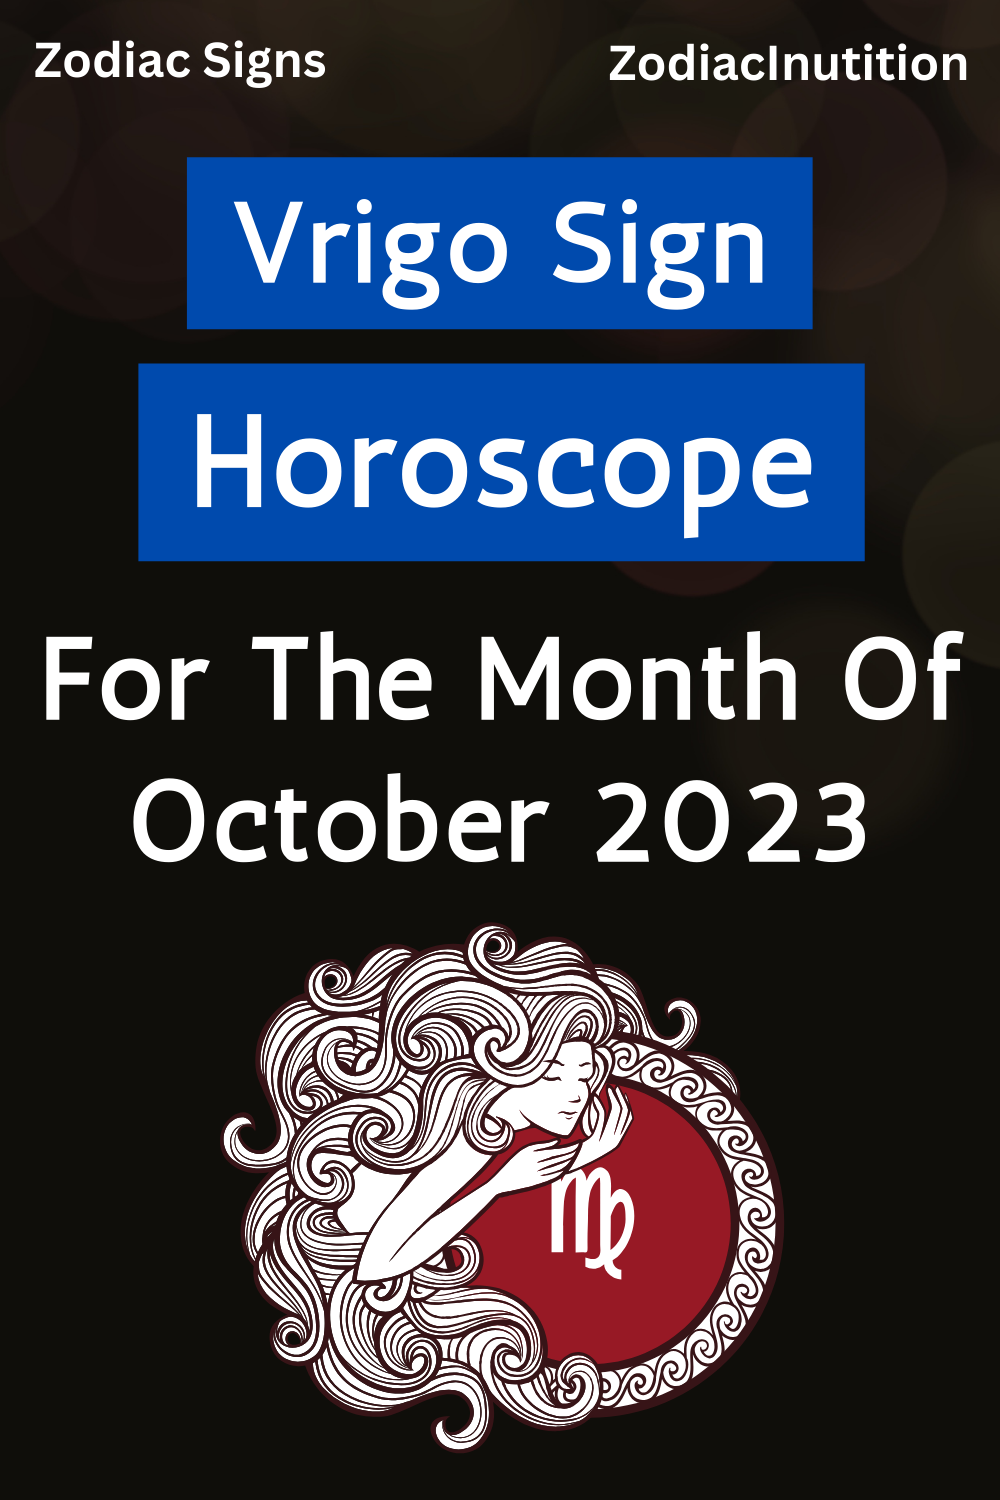 Virgo: Horoscope For The Month Of October 2023